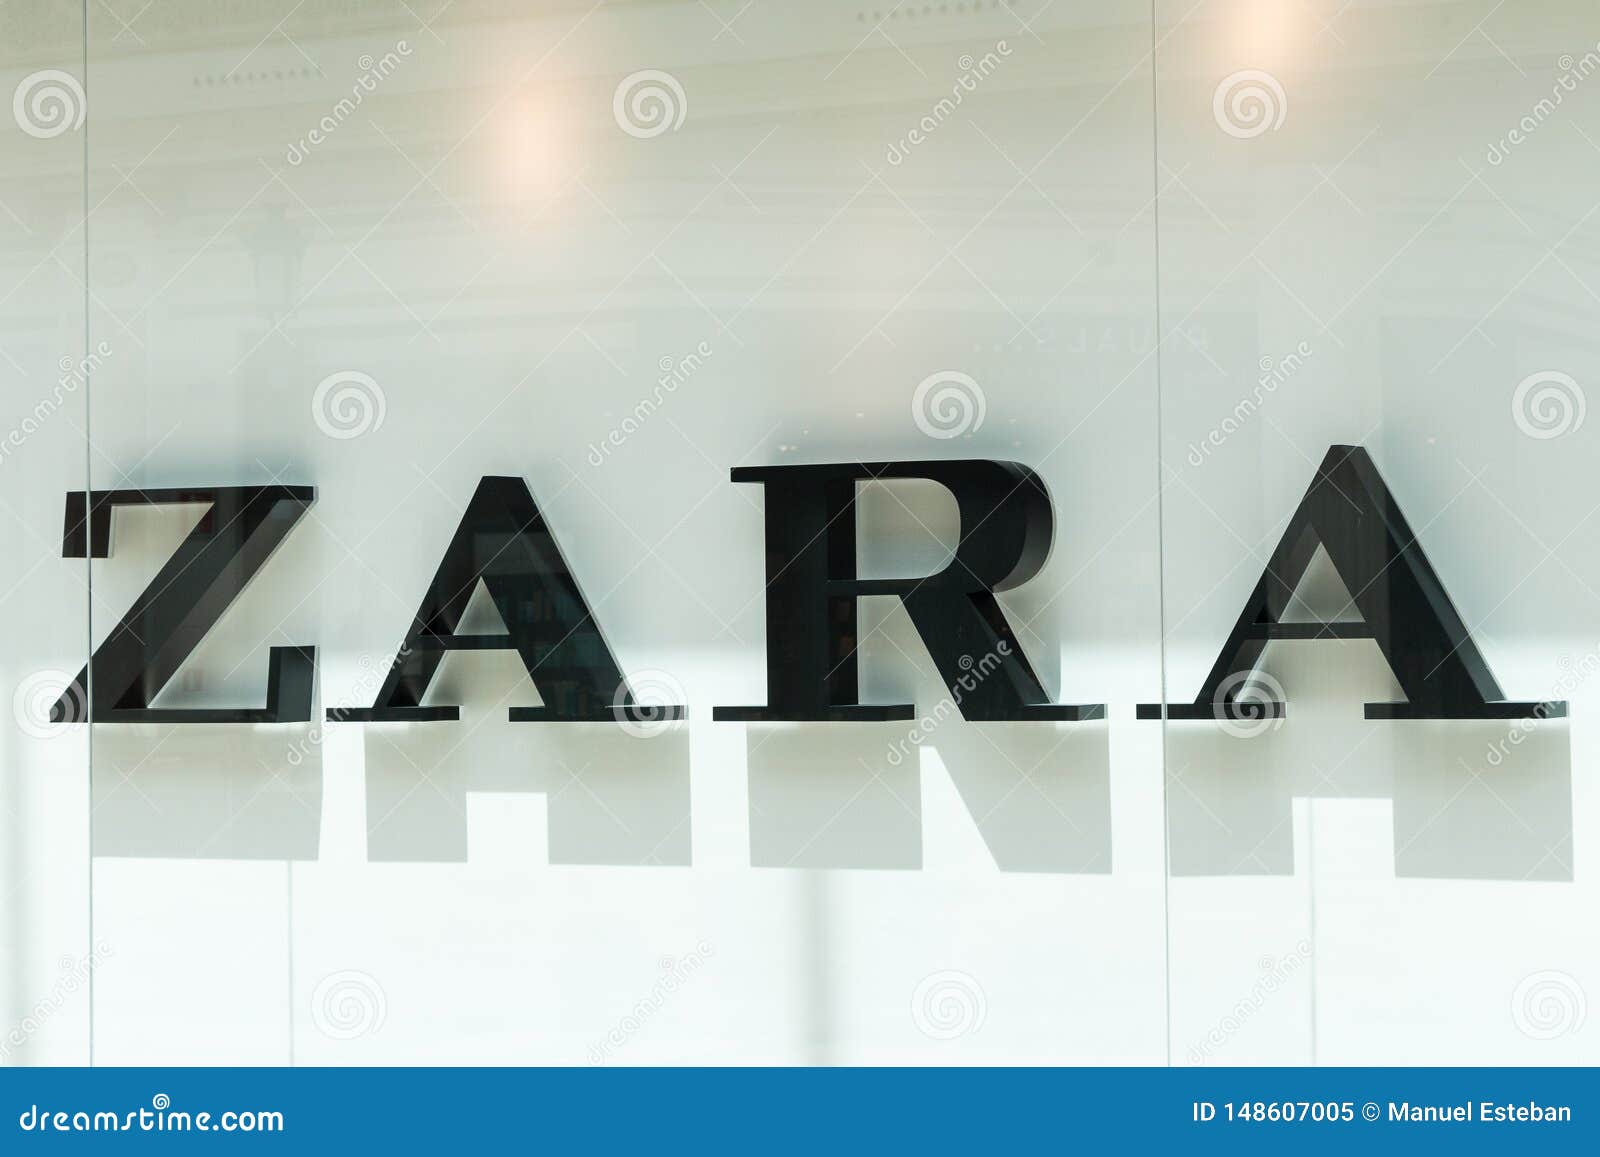 zara khan boutique